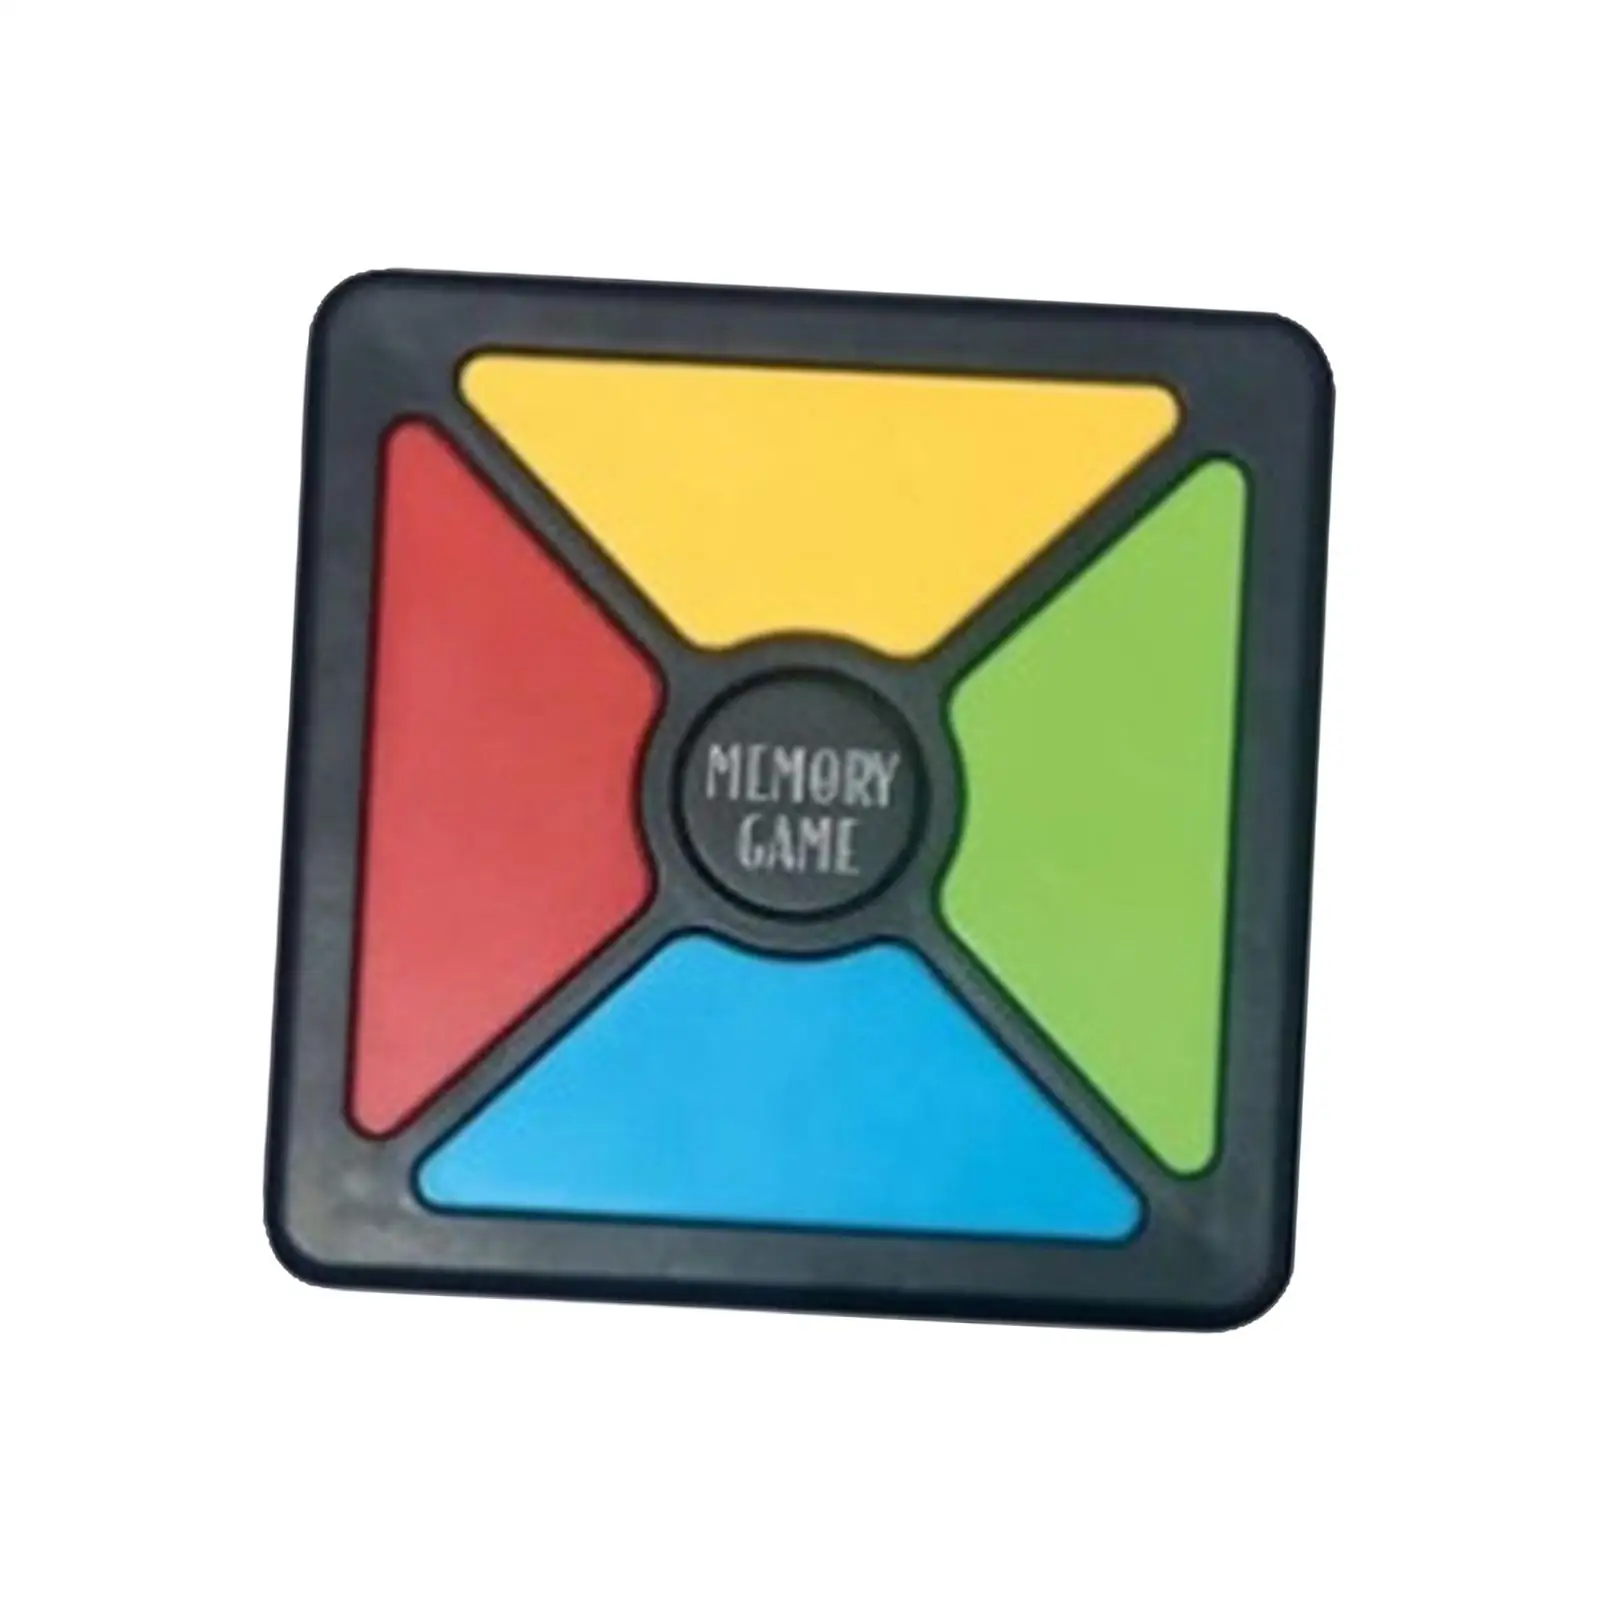 Color Memorizing Board Games, Interactive Color Recognition,